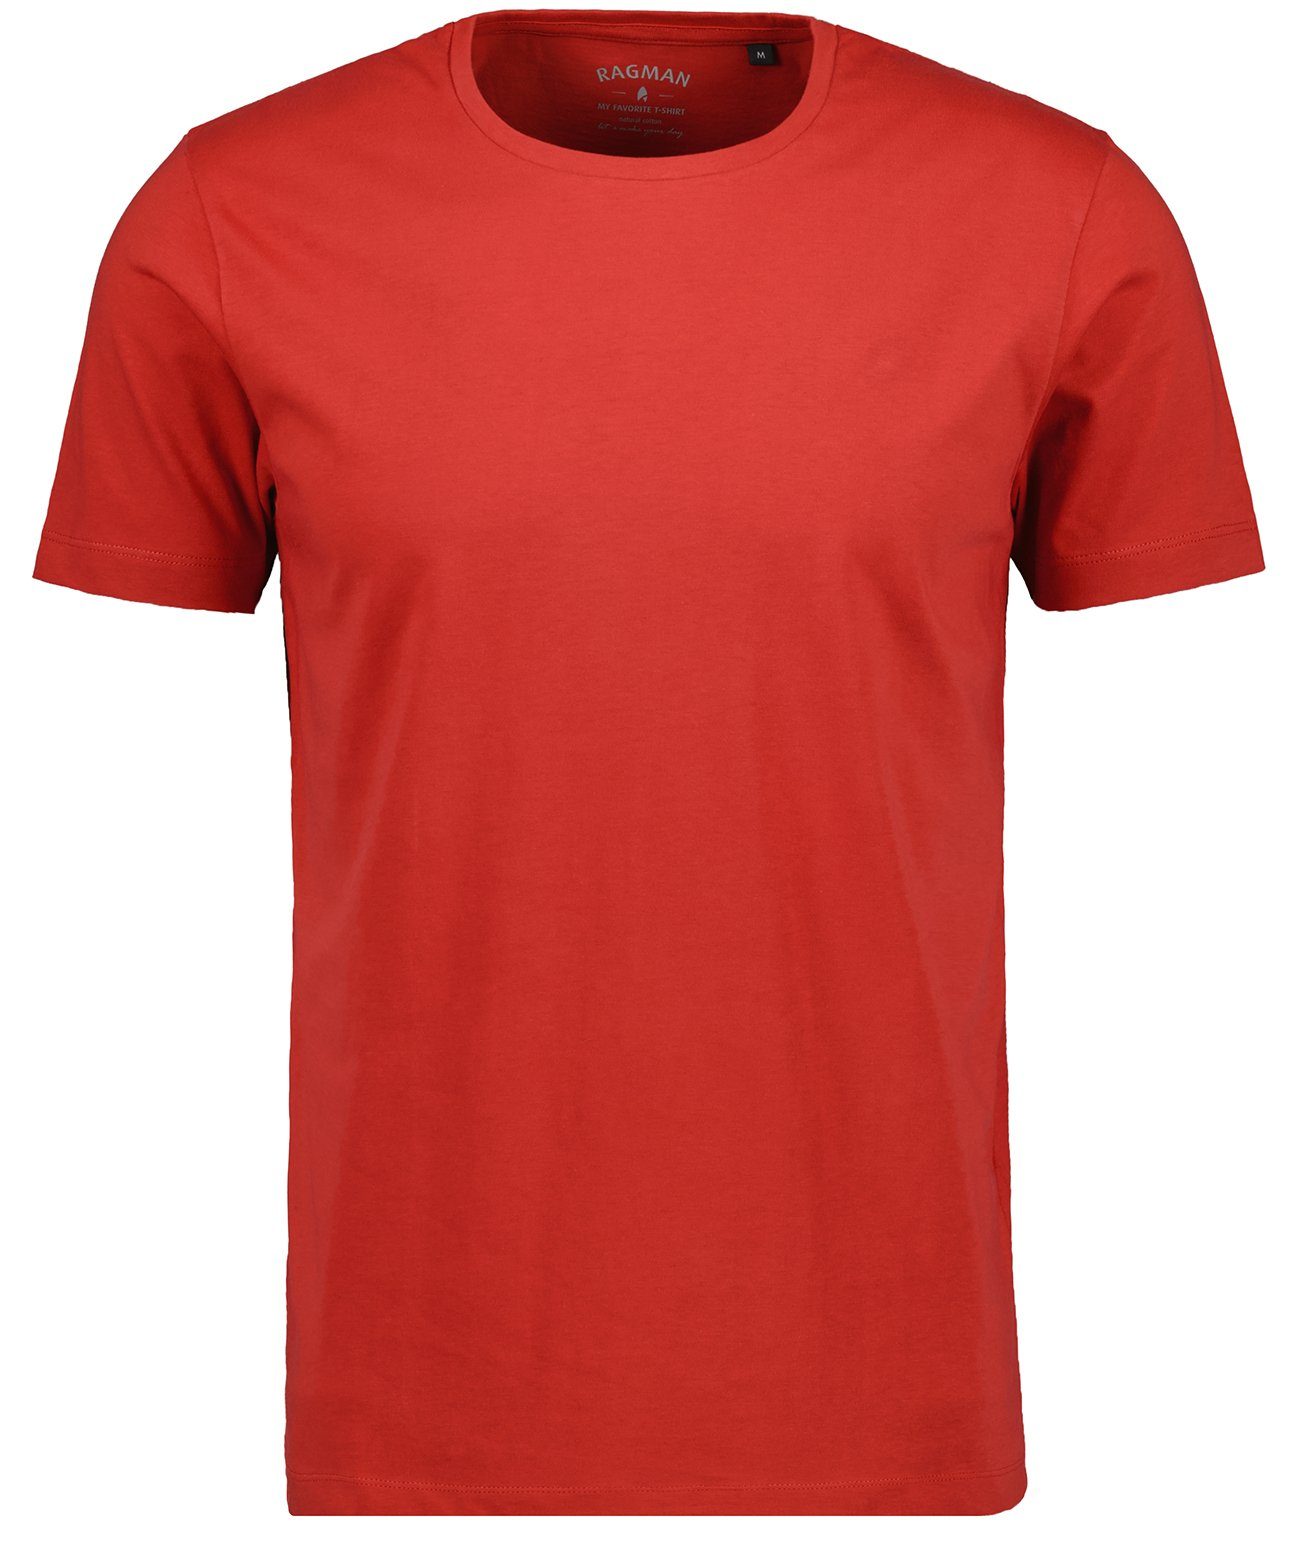 Weinrot-615 RAGMAN T-Shirt